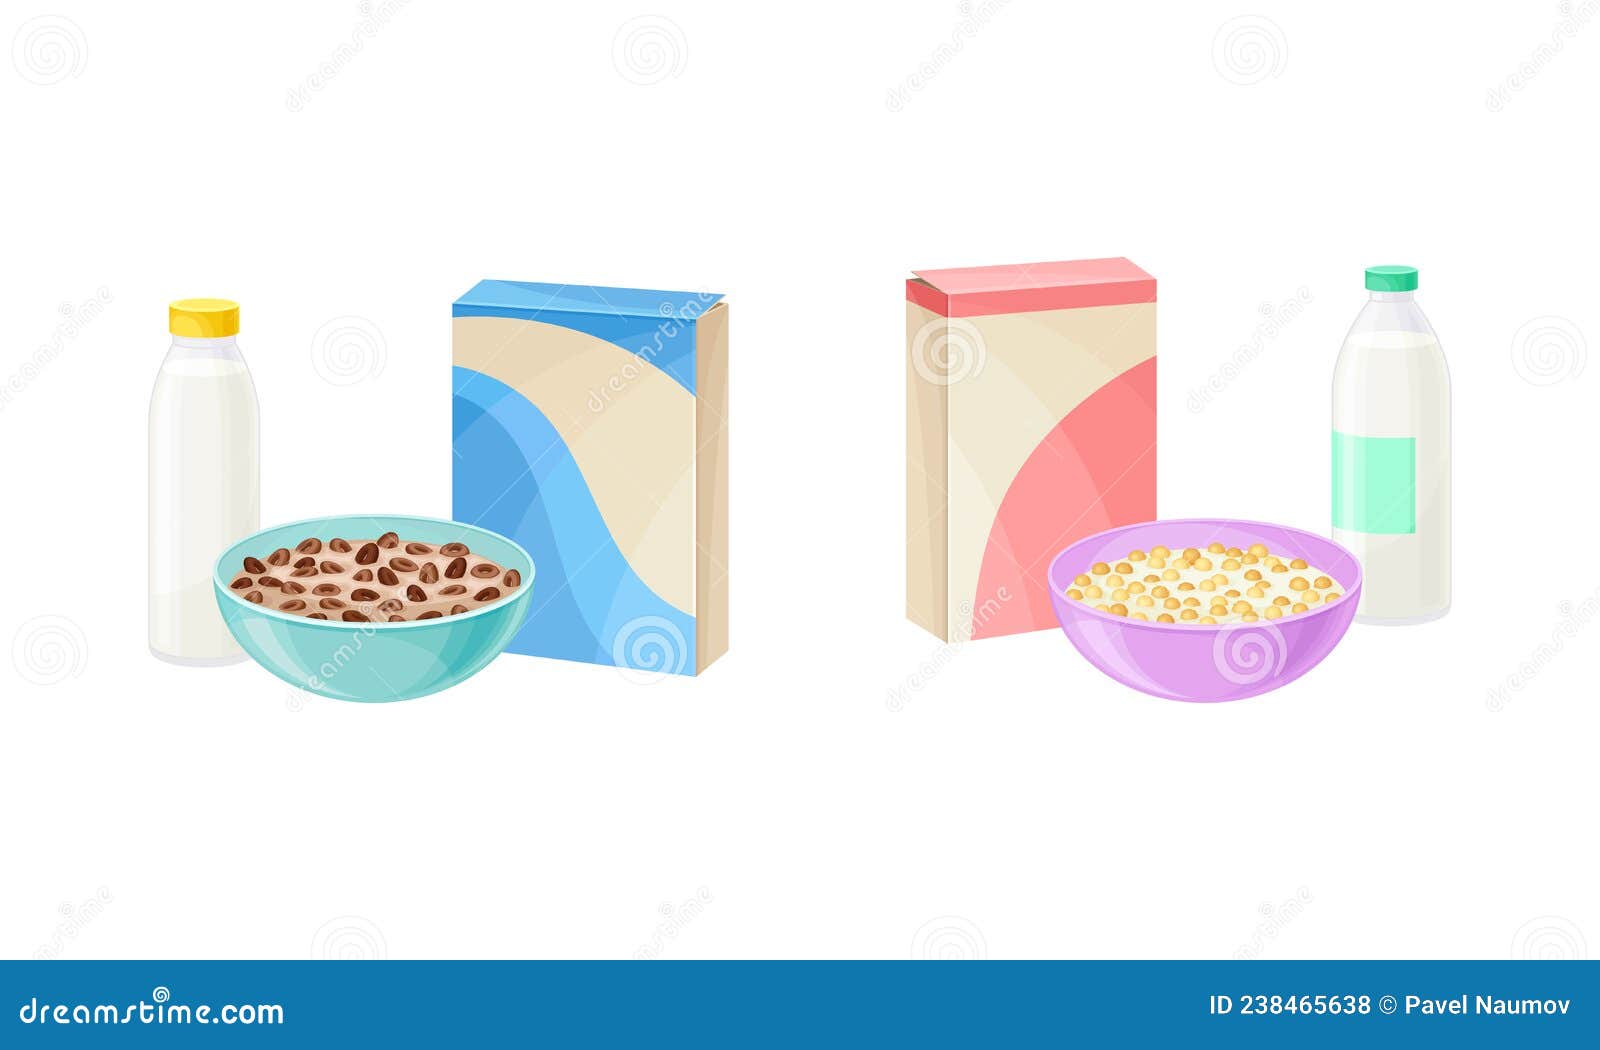 https://thumbs.dreamstime.com/z/breakfast-crunchy-cereal-poured-bowl-milk-yogurt-bottle-vector-set-sweet-multigrain-proteinic-morning-meal-concept-238465638.jpg